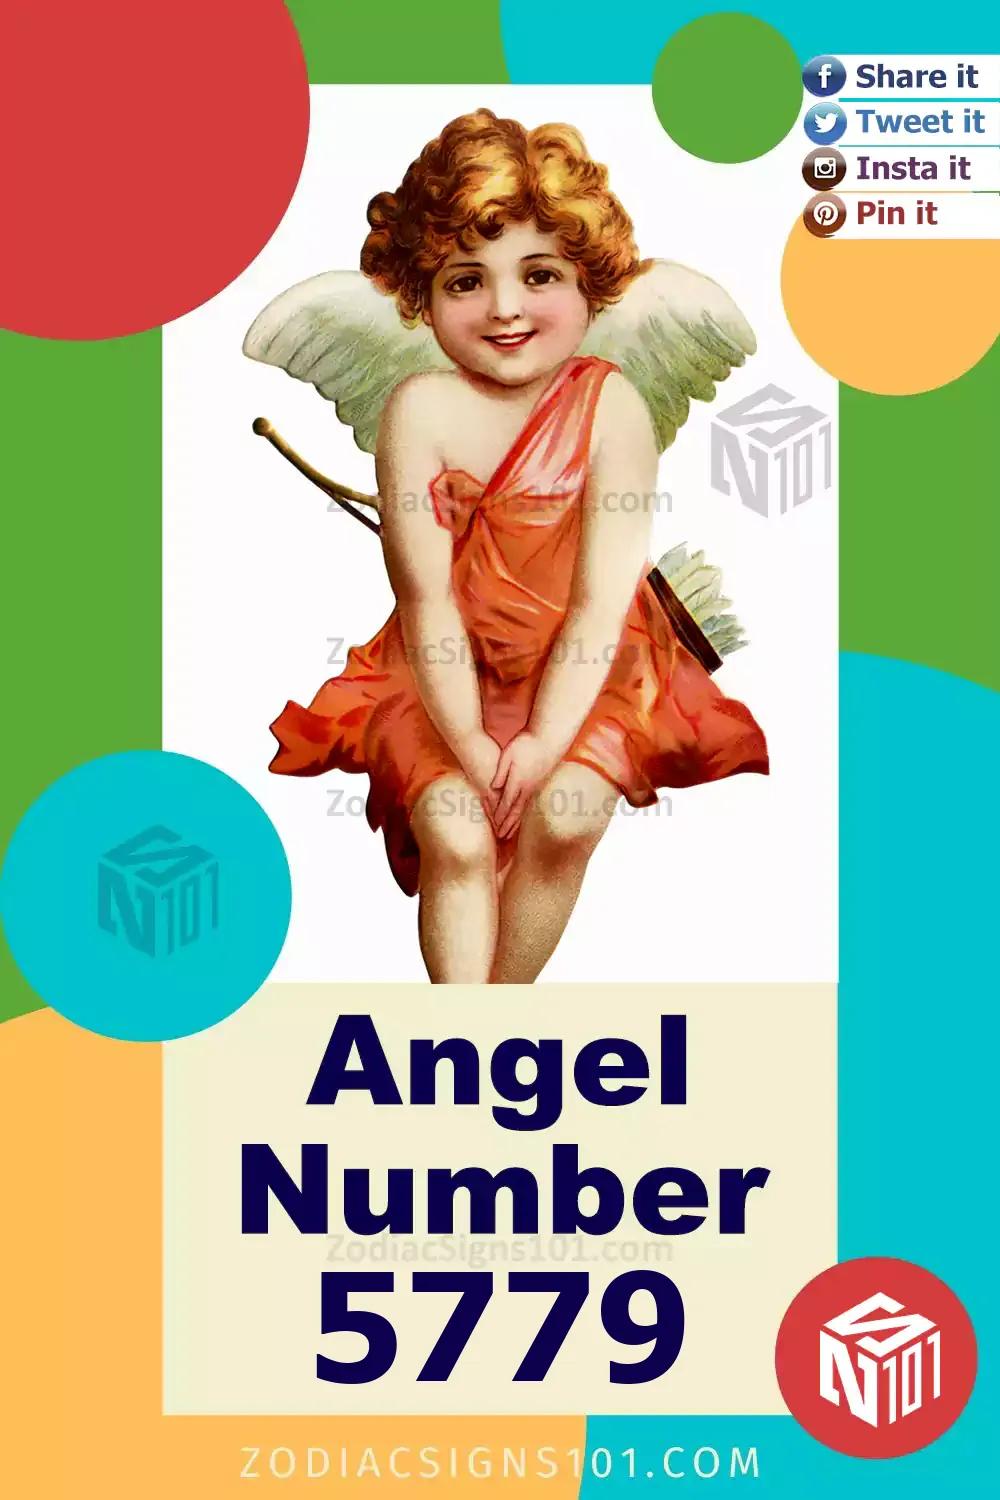 5779-Angel-Number-Meaning.jpg